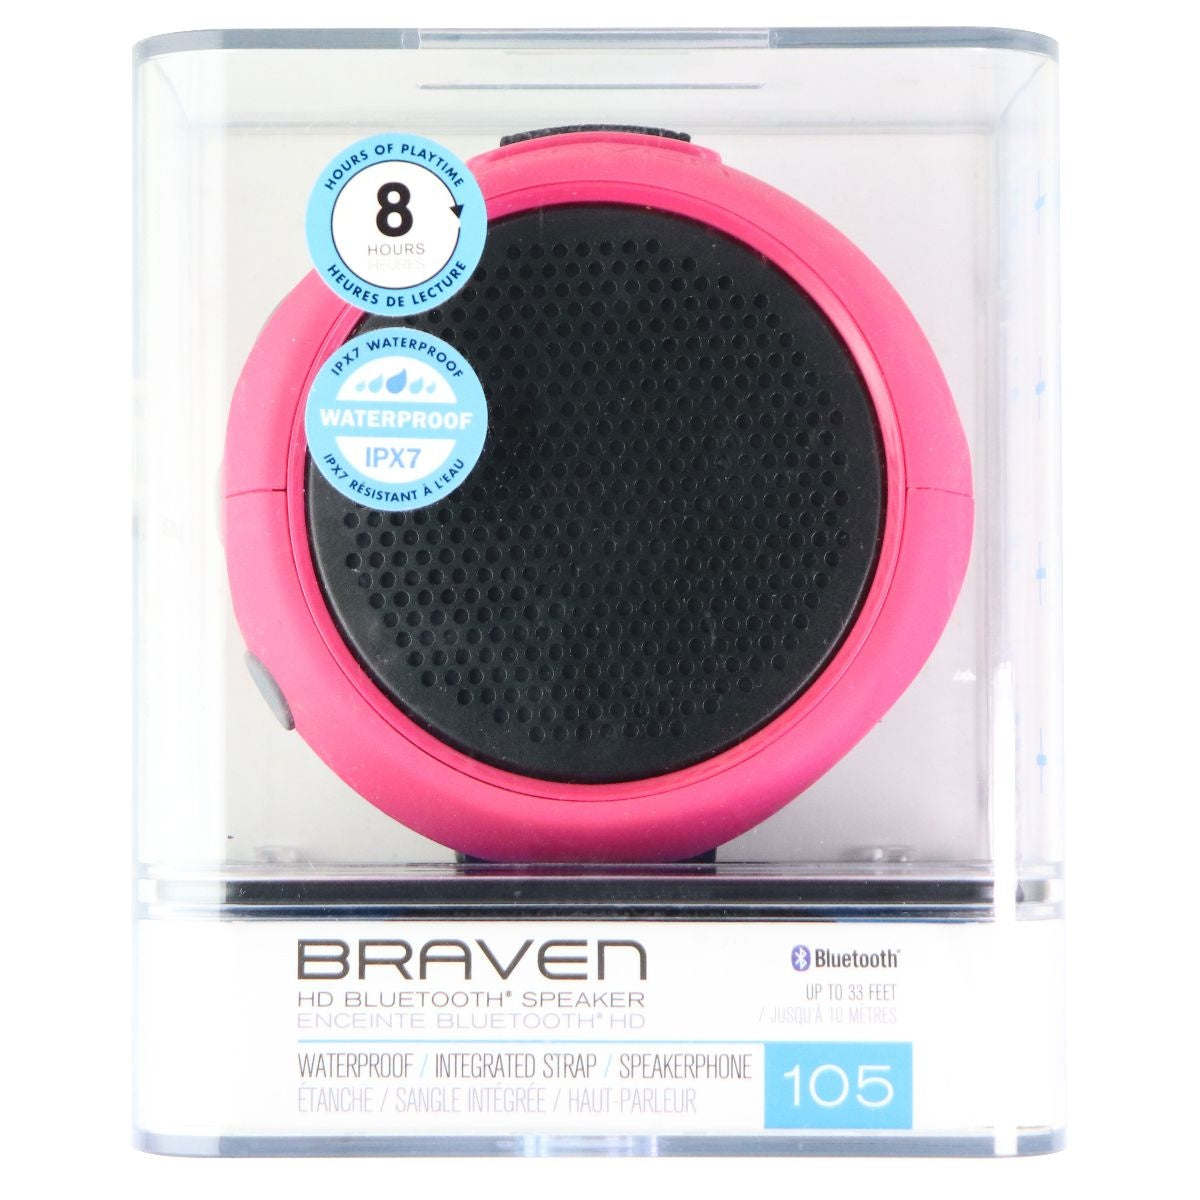  Braven 105 Wireless Portable Bluetooth Speaker